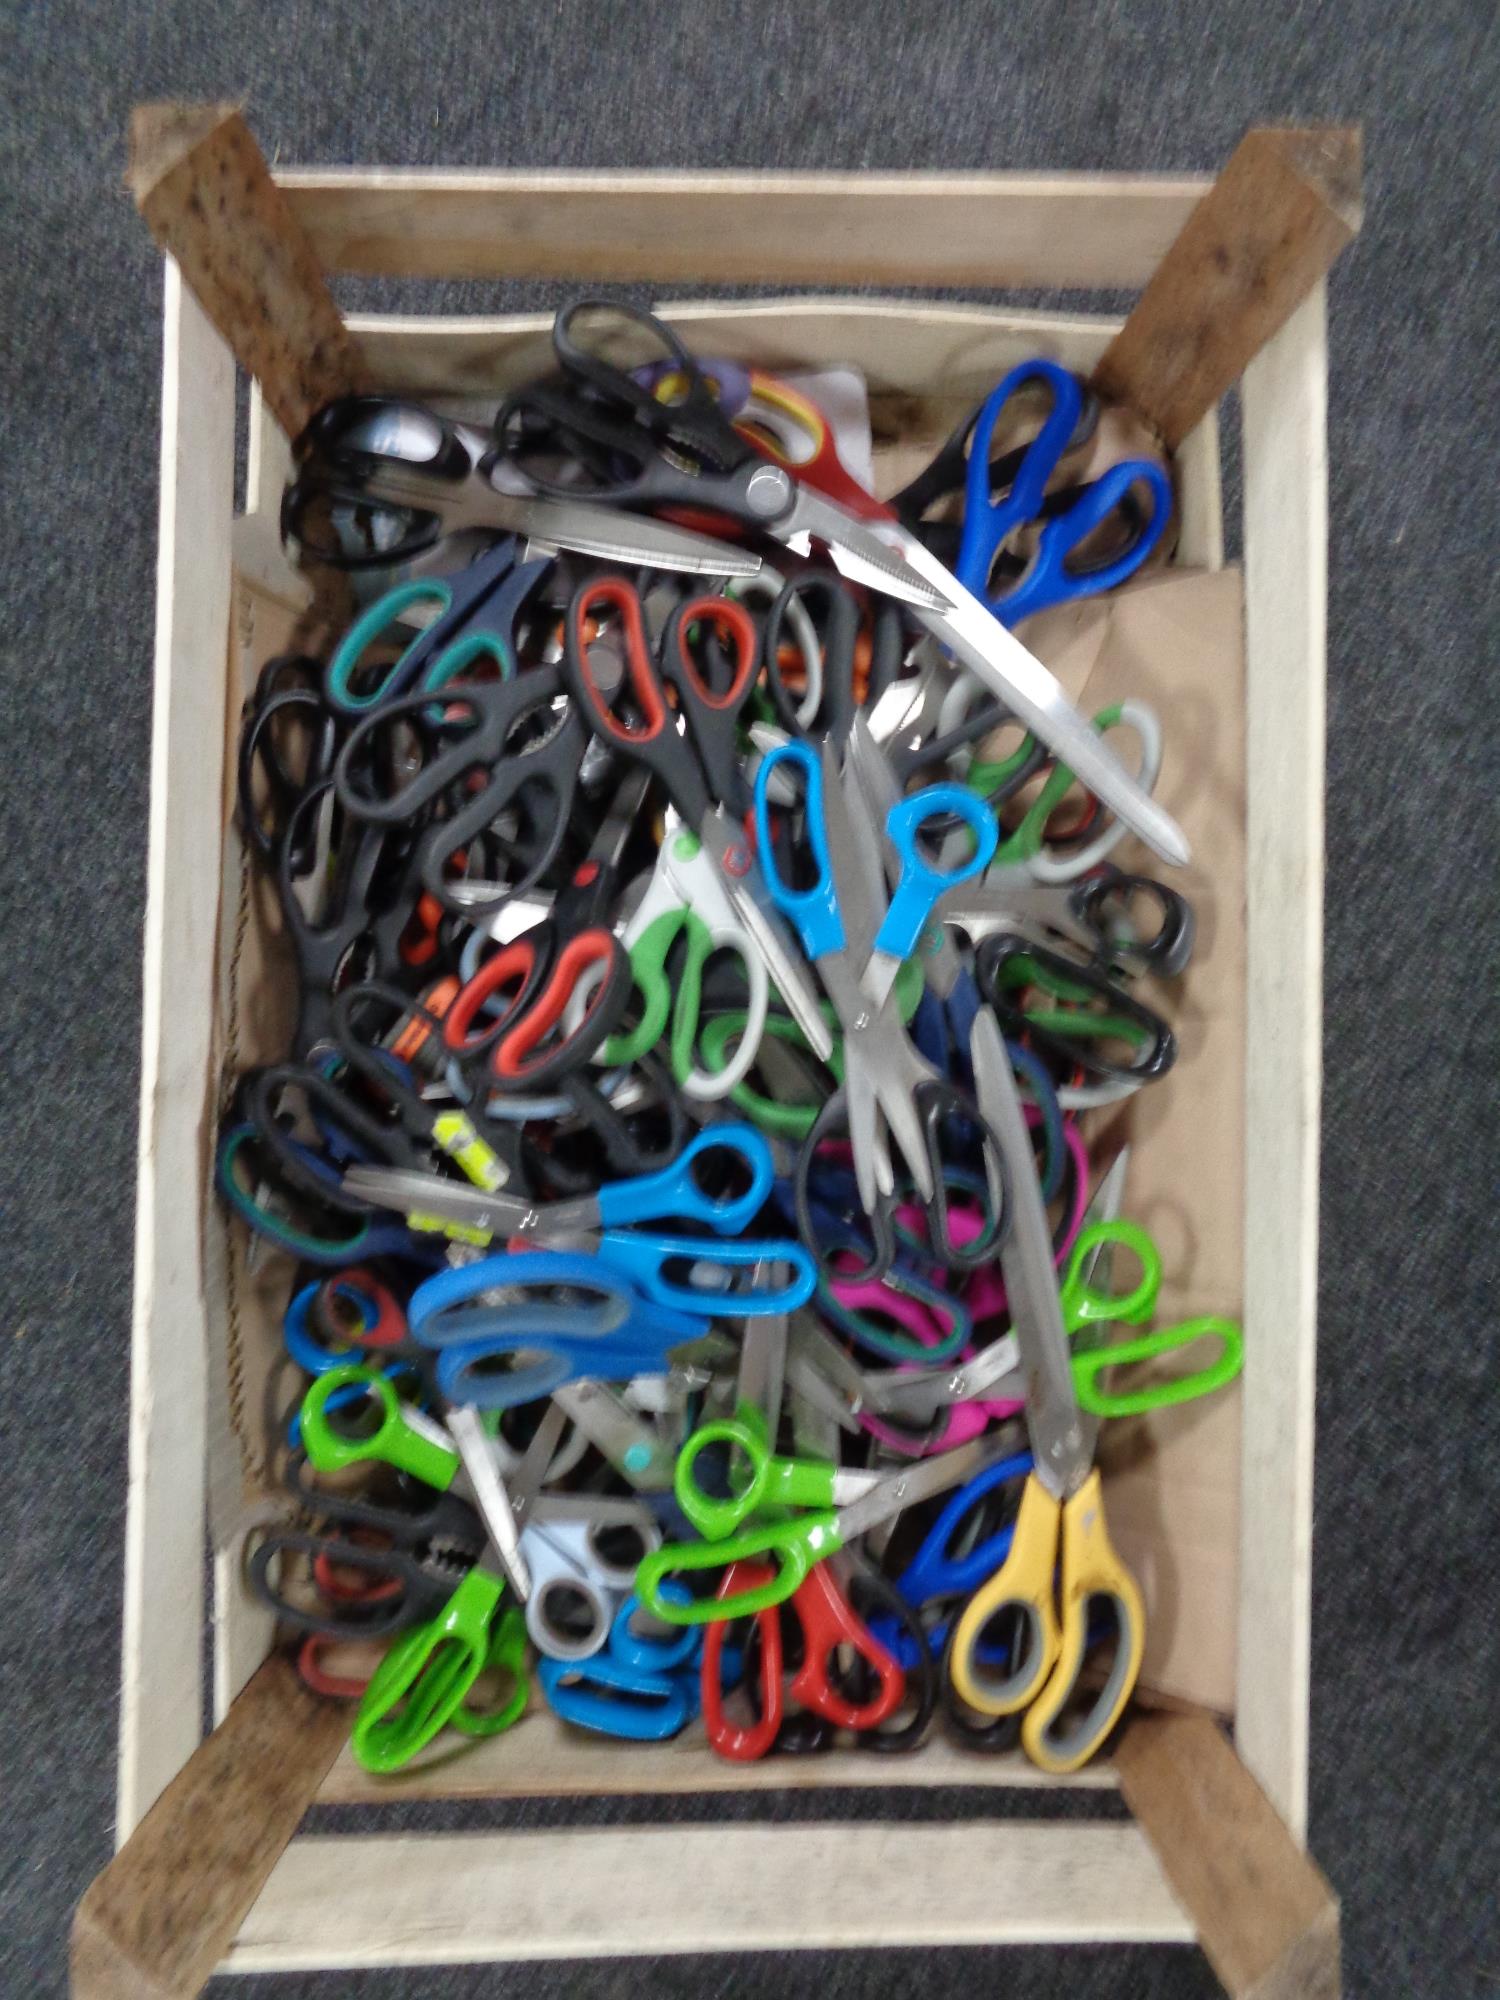 A box of a large quantity of scissors